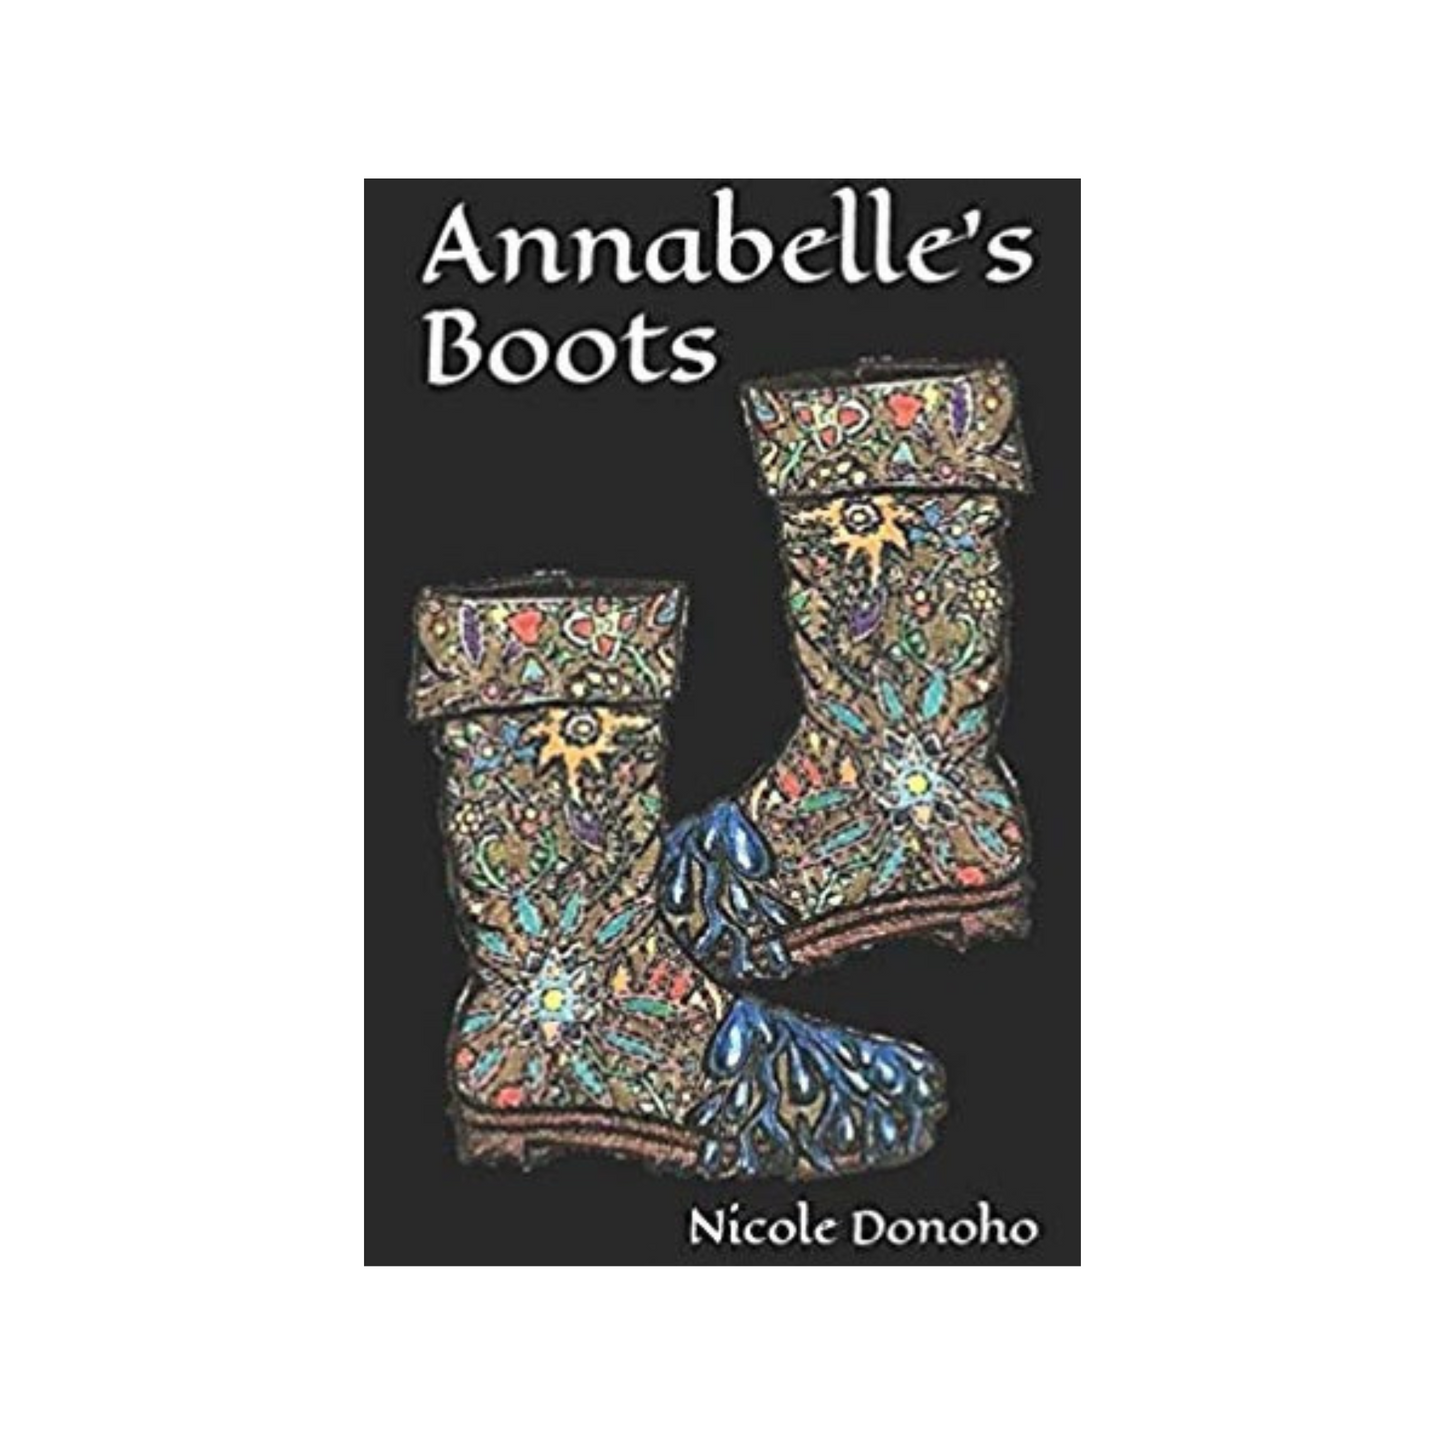 Annabelle's Boots (An Adult Novel)